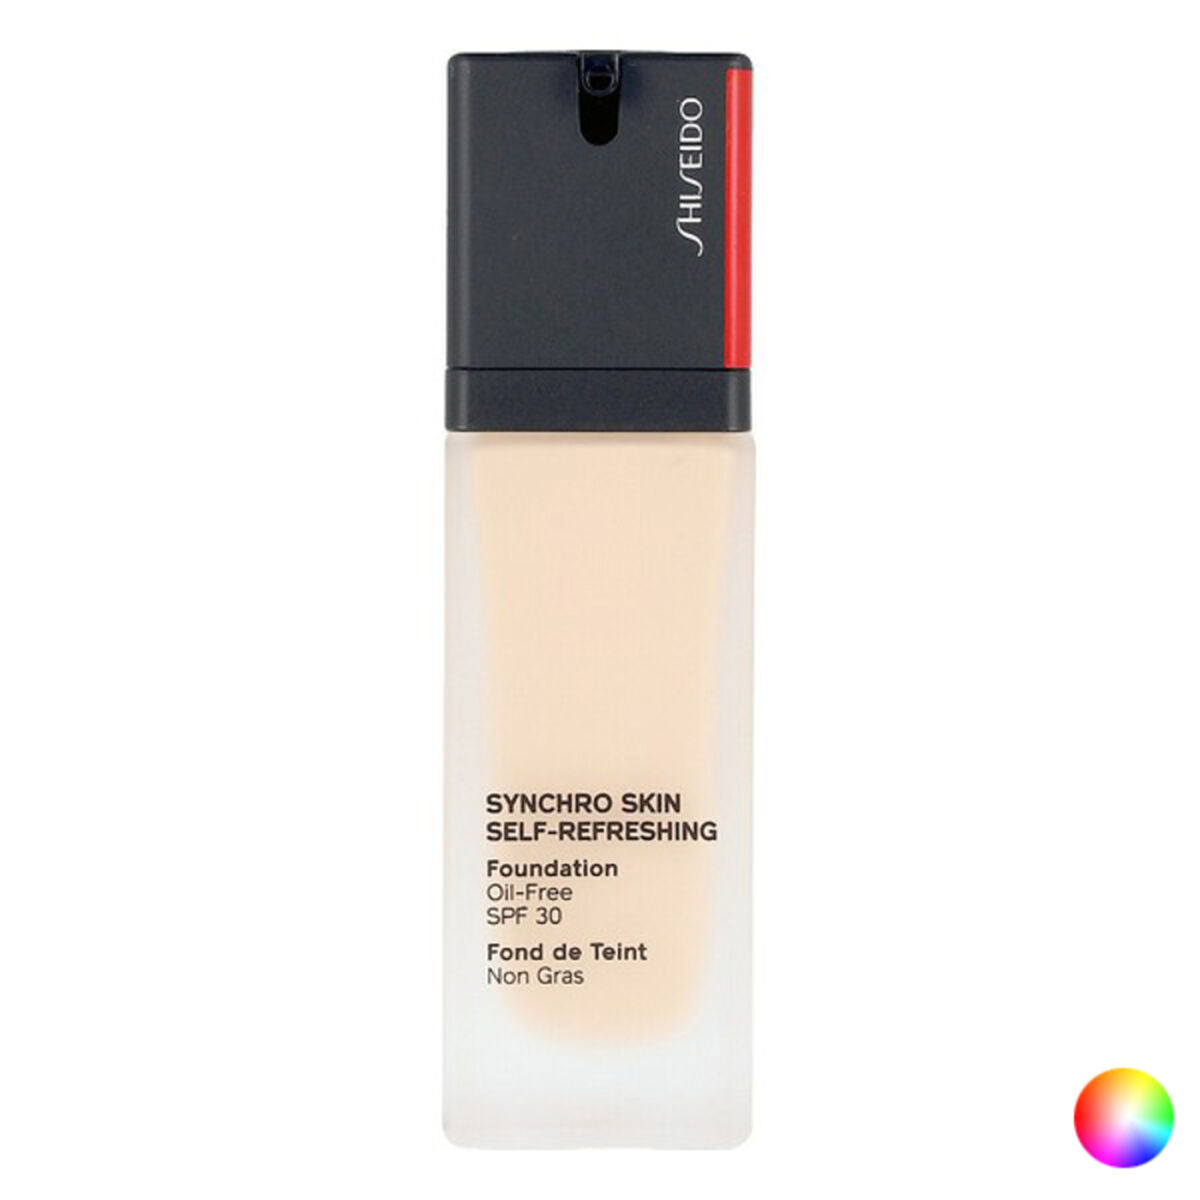 Shiseido de la base de base de maquillage liquide (30 ml)